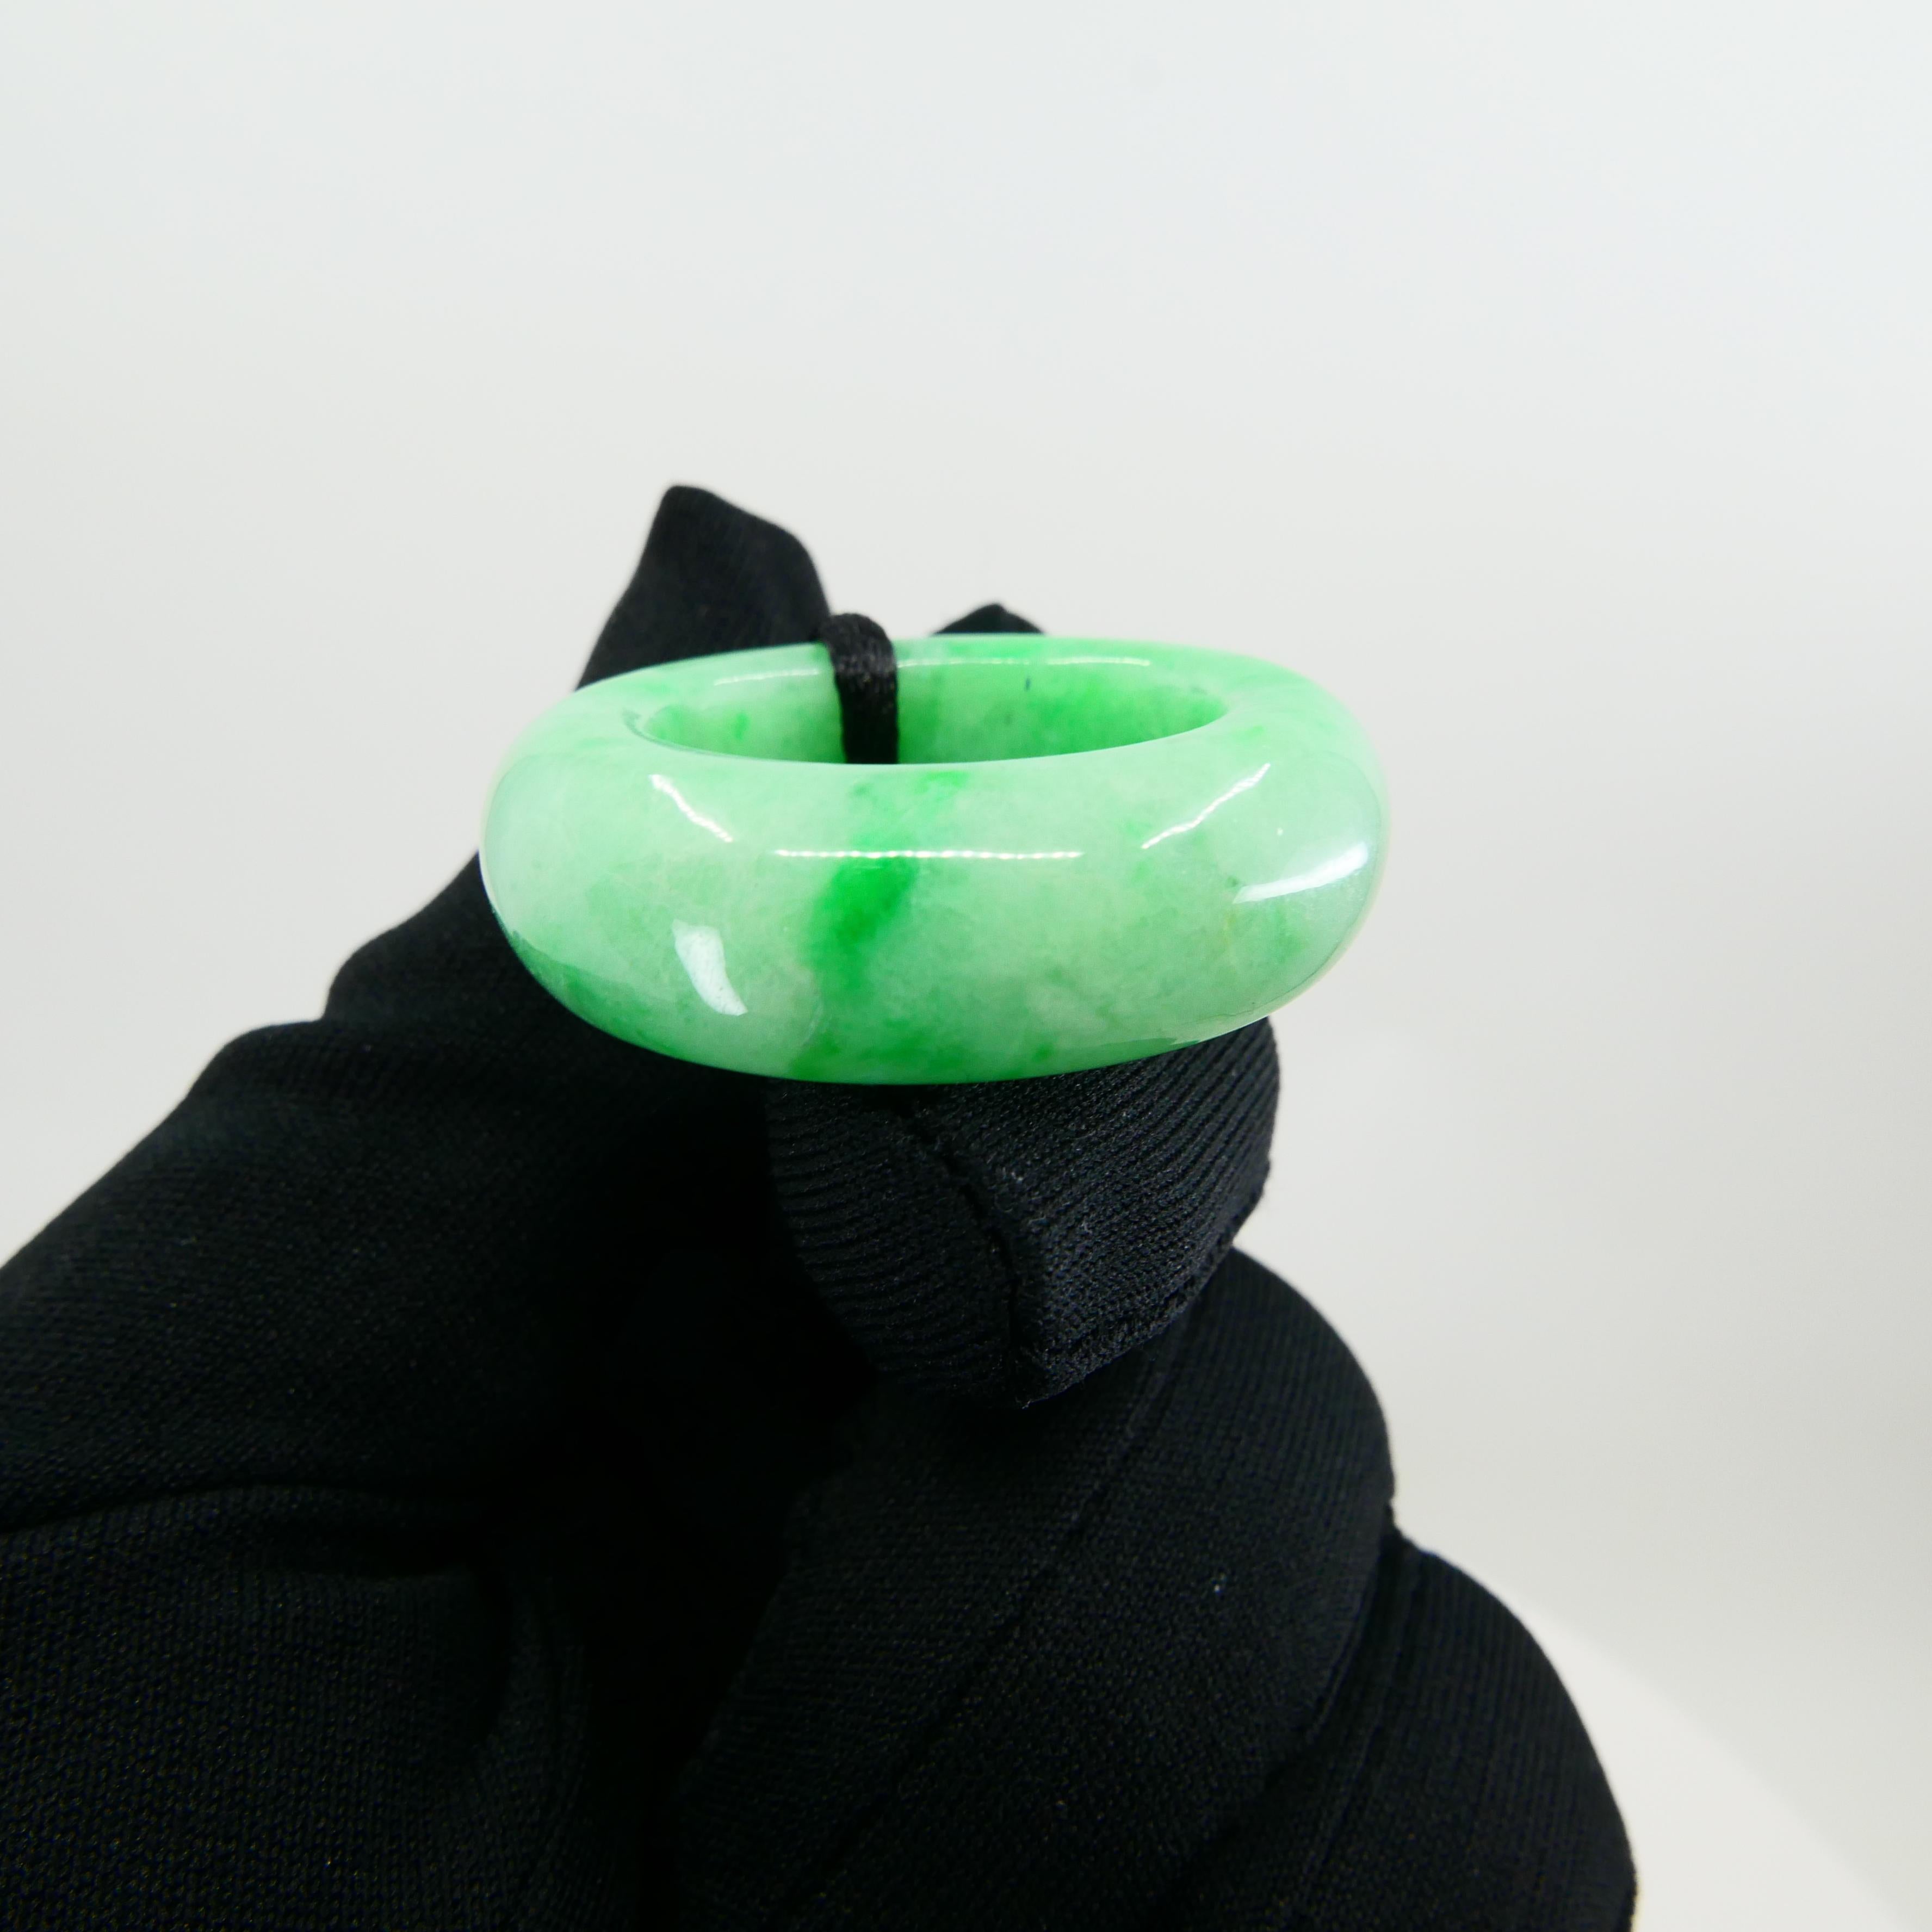 Certified 100 Carat Jadeite Jade Peace Pendant, Apple Green, Substantial For Sale 3